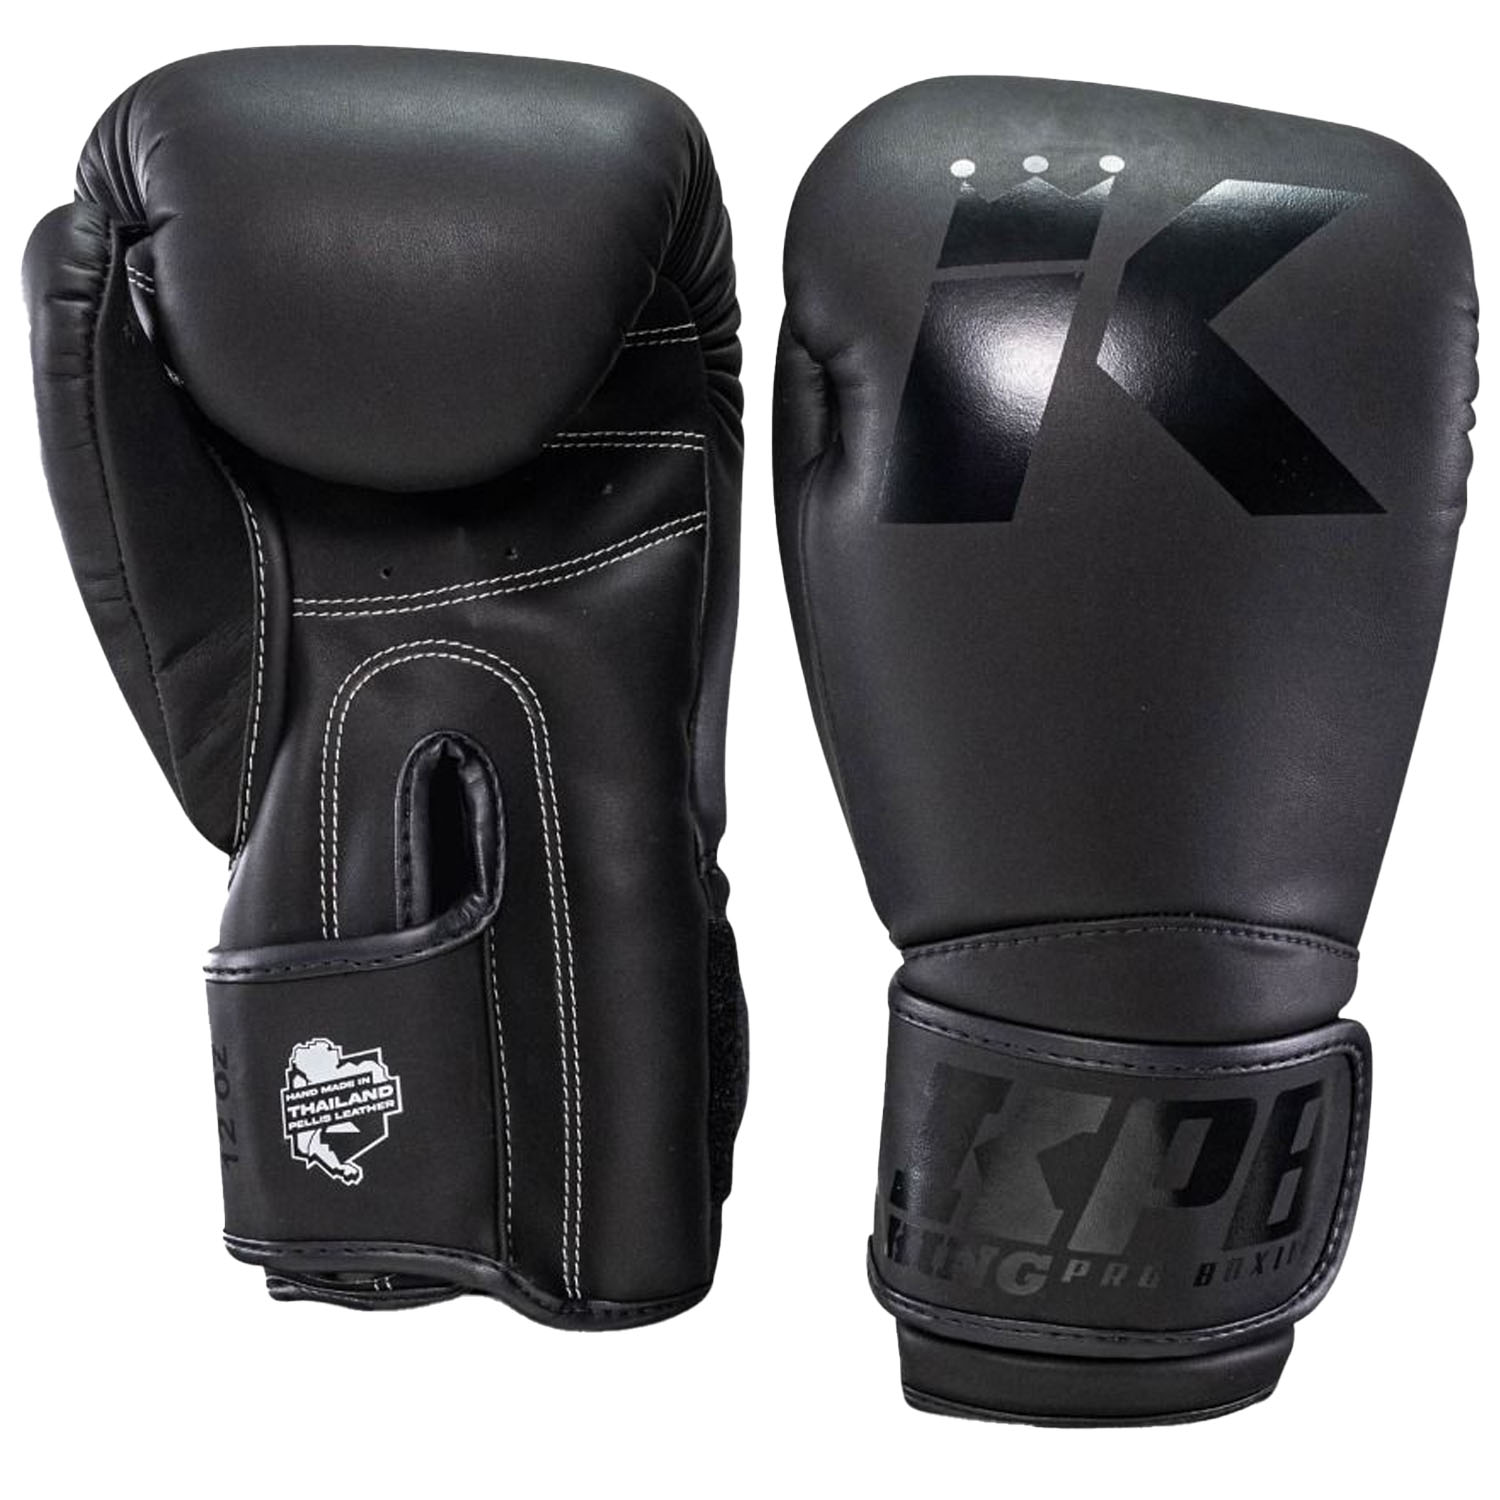 KING PRO BOXING Boxing Gloves, BGK 1, black, 10 Oz